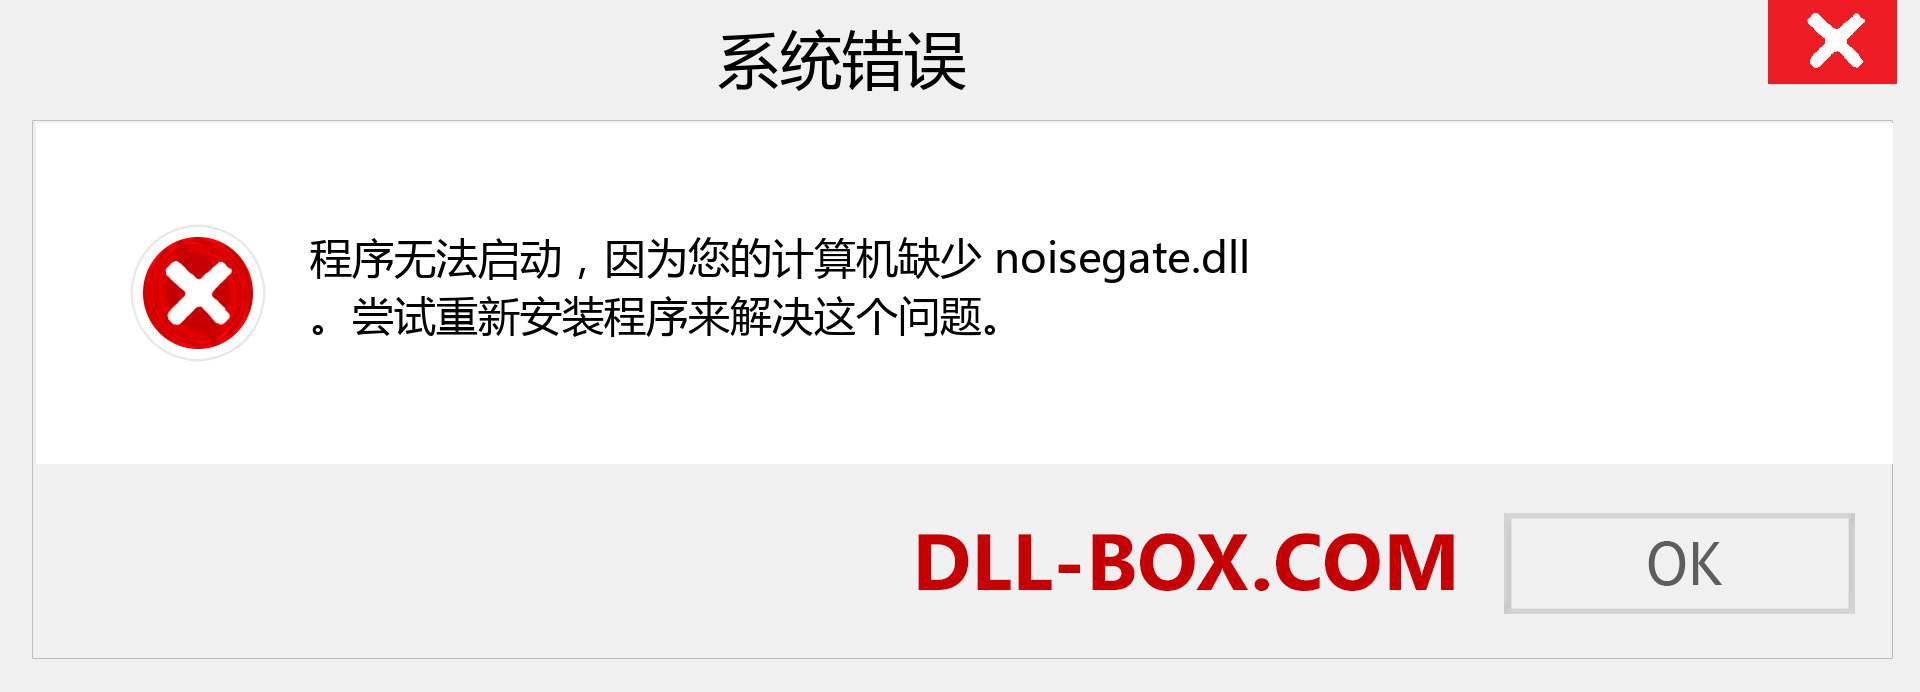 noisegate.dll 文件丢失？。 适用于 Windows 7、8、10 的下载 - 修复 Windows、照片、图像上的 noisegate dll 丢失错误